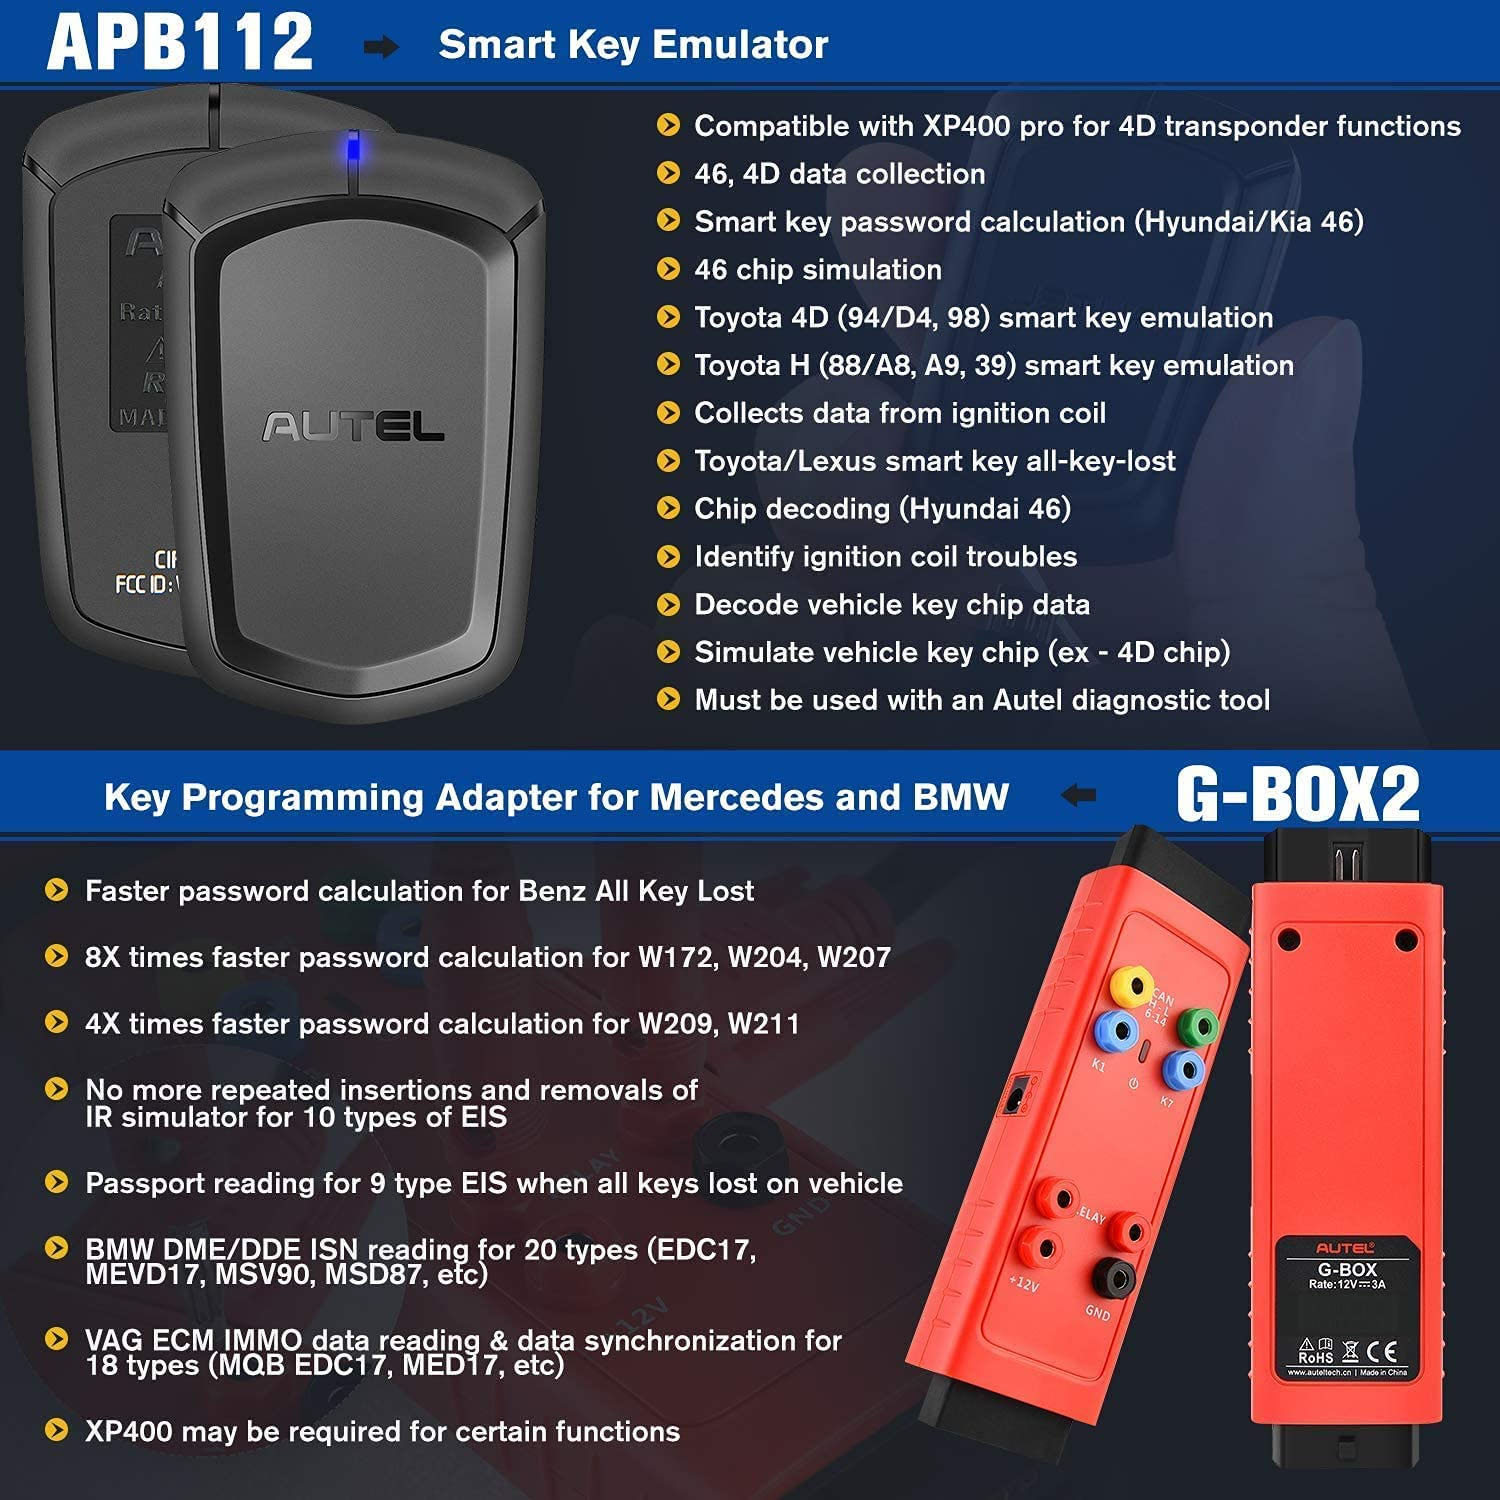 Autel MaxiIM IM608PRO Plus IMKPA Accessories with G-Box2 and APB112